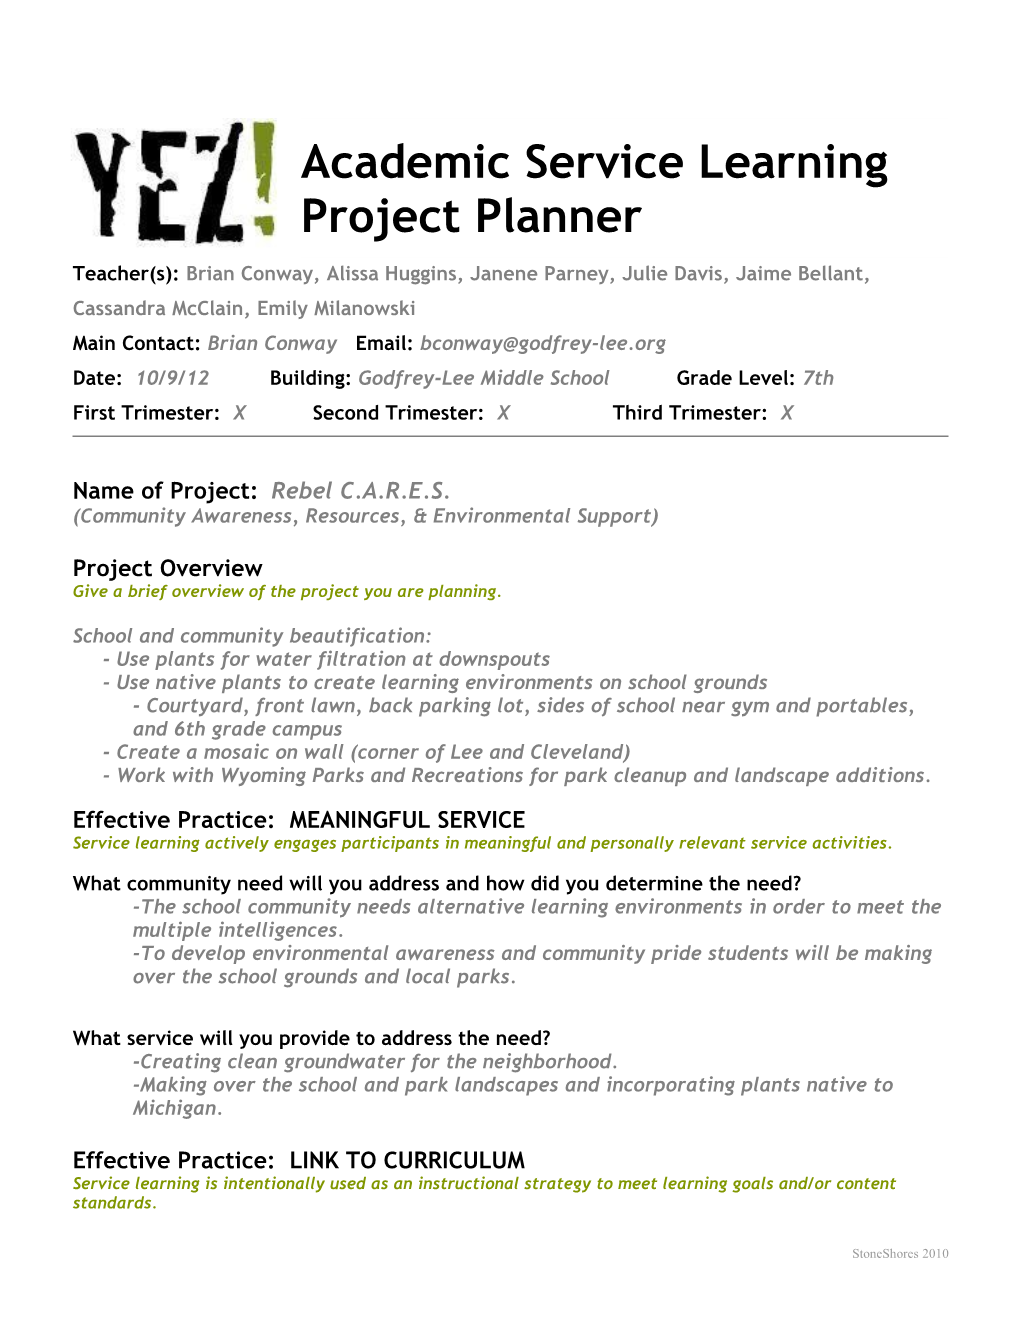 YEZ-Project-Planner